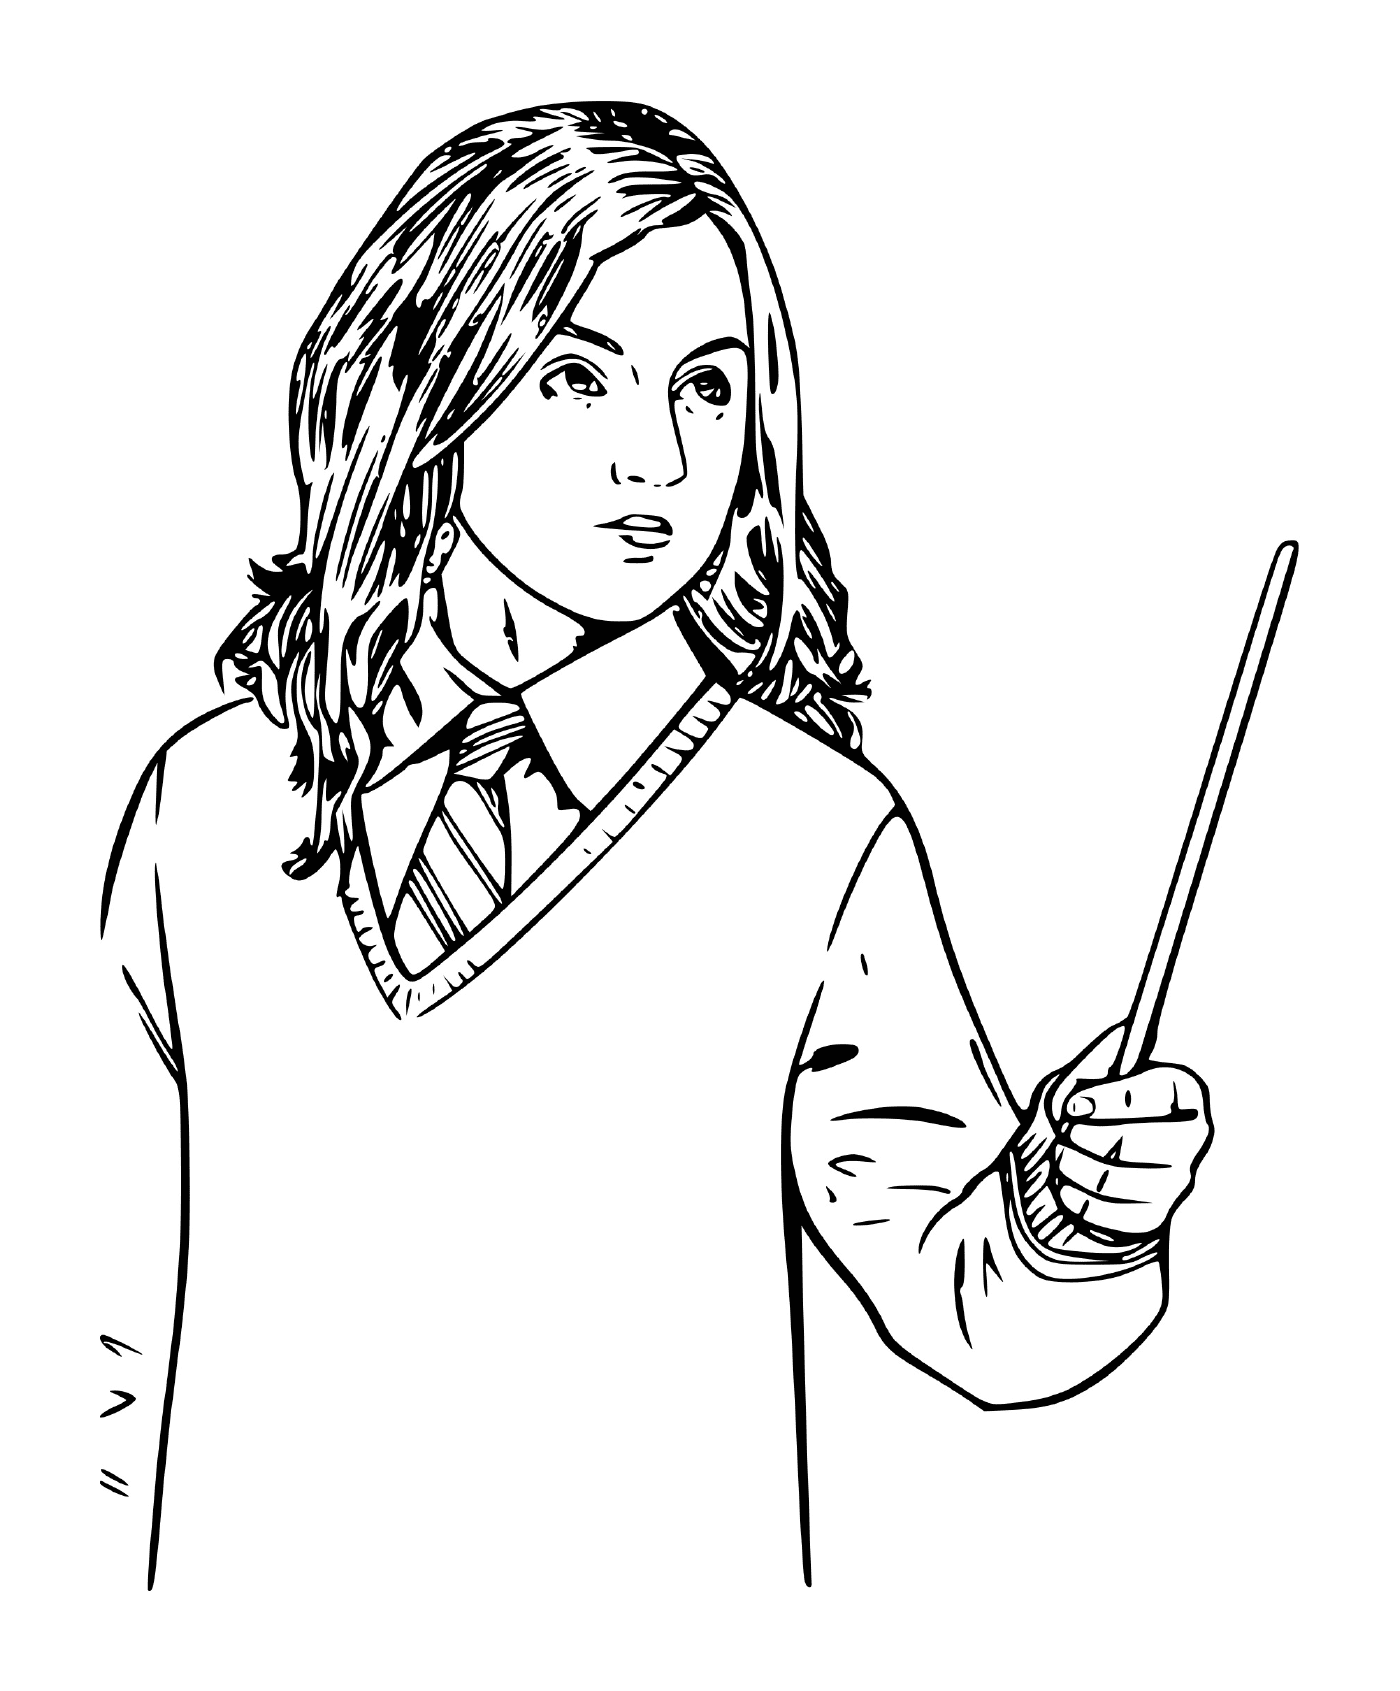  Hermione Granger, lontra patronus 